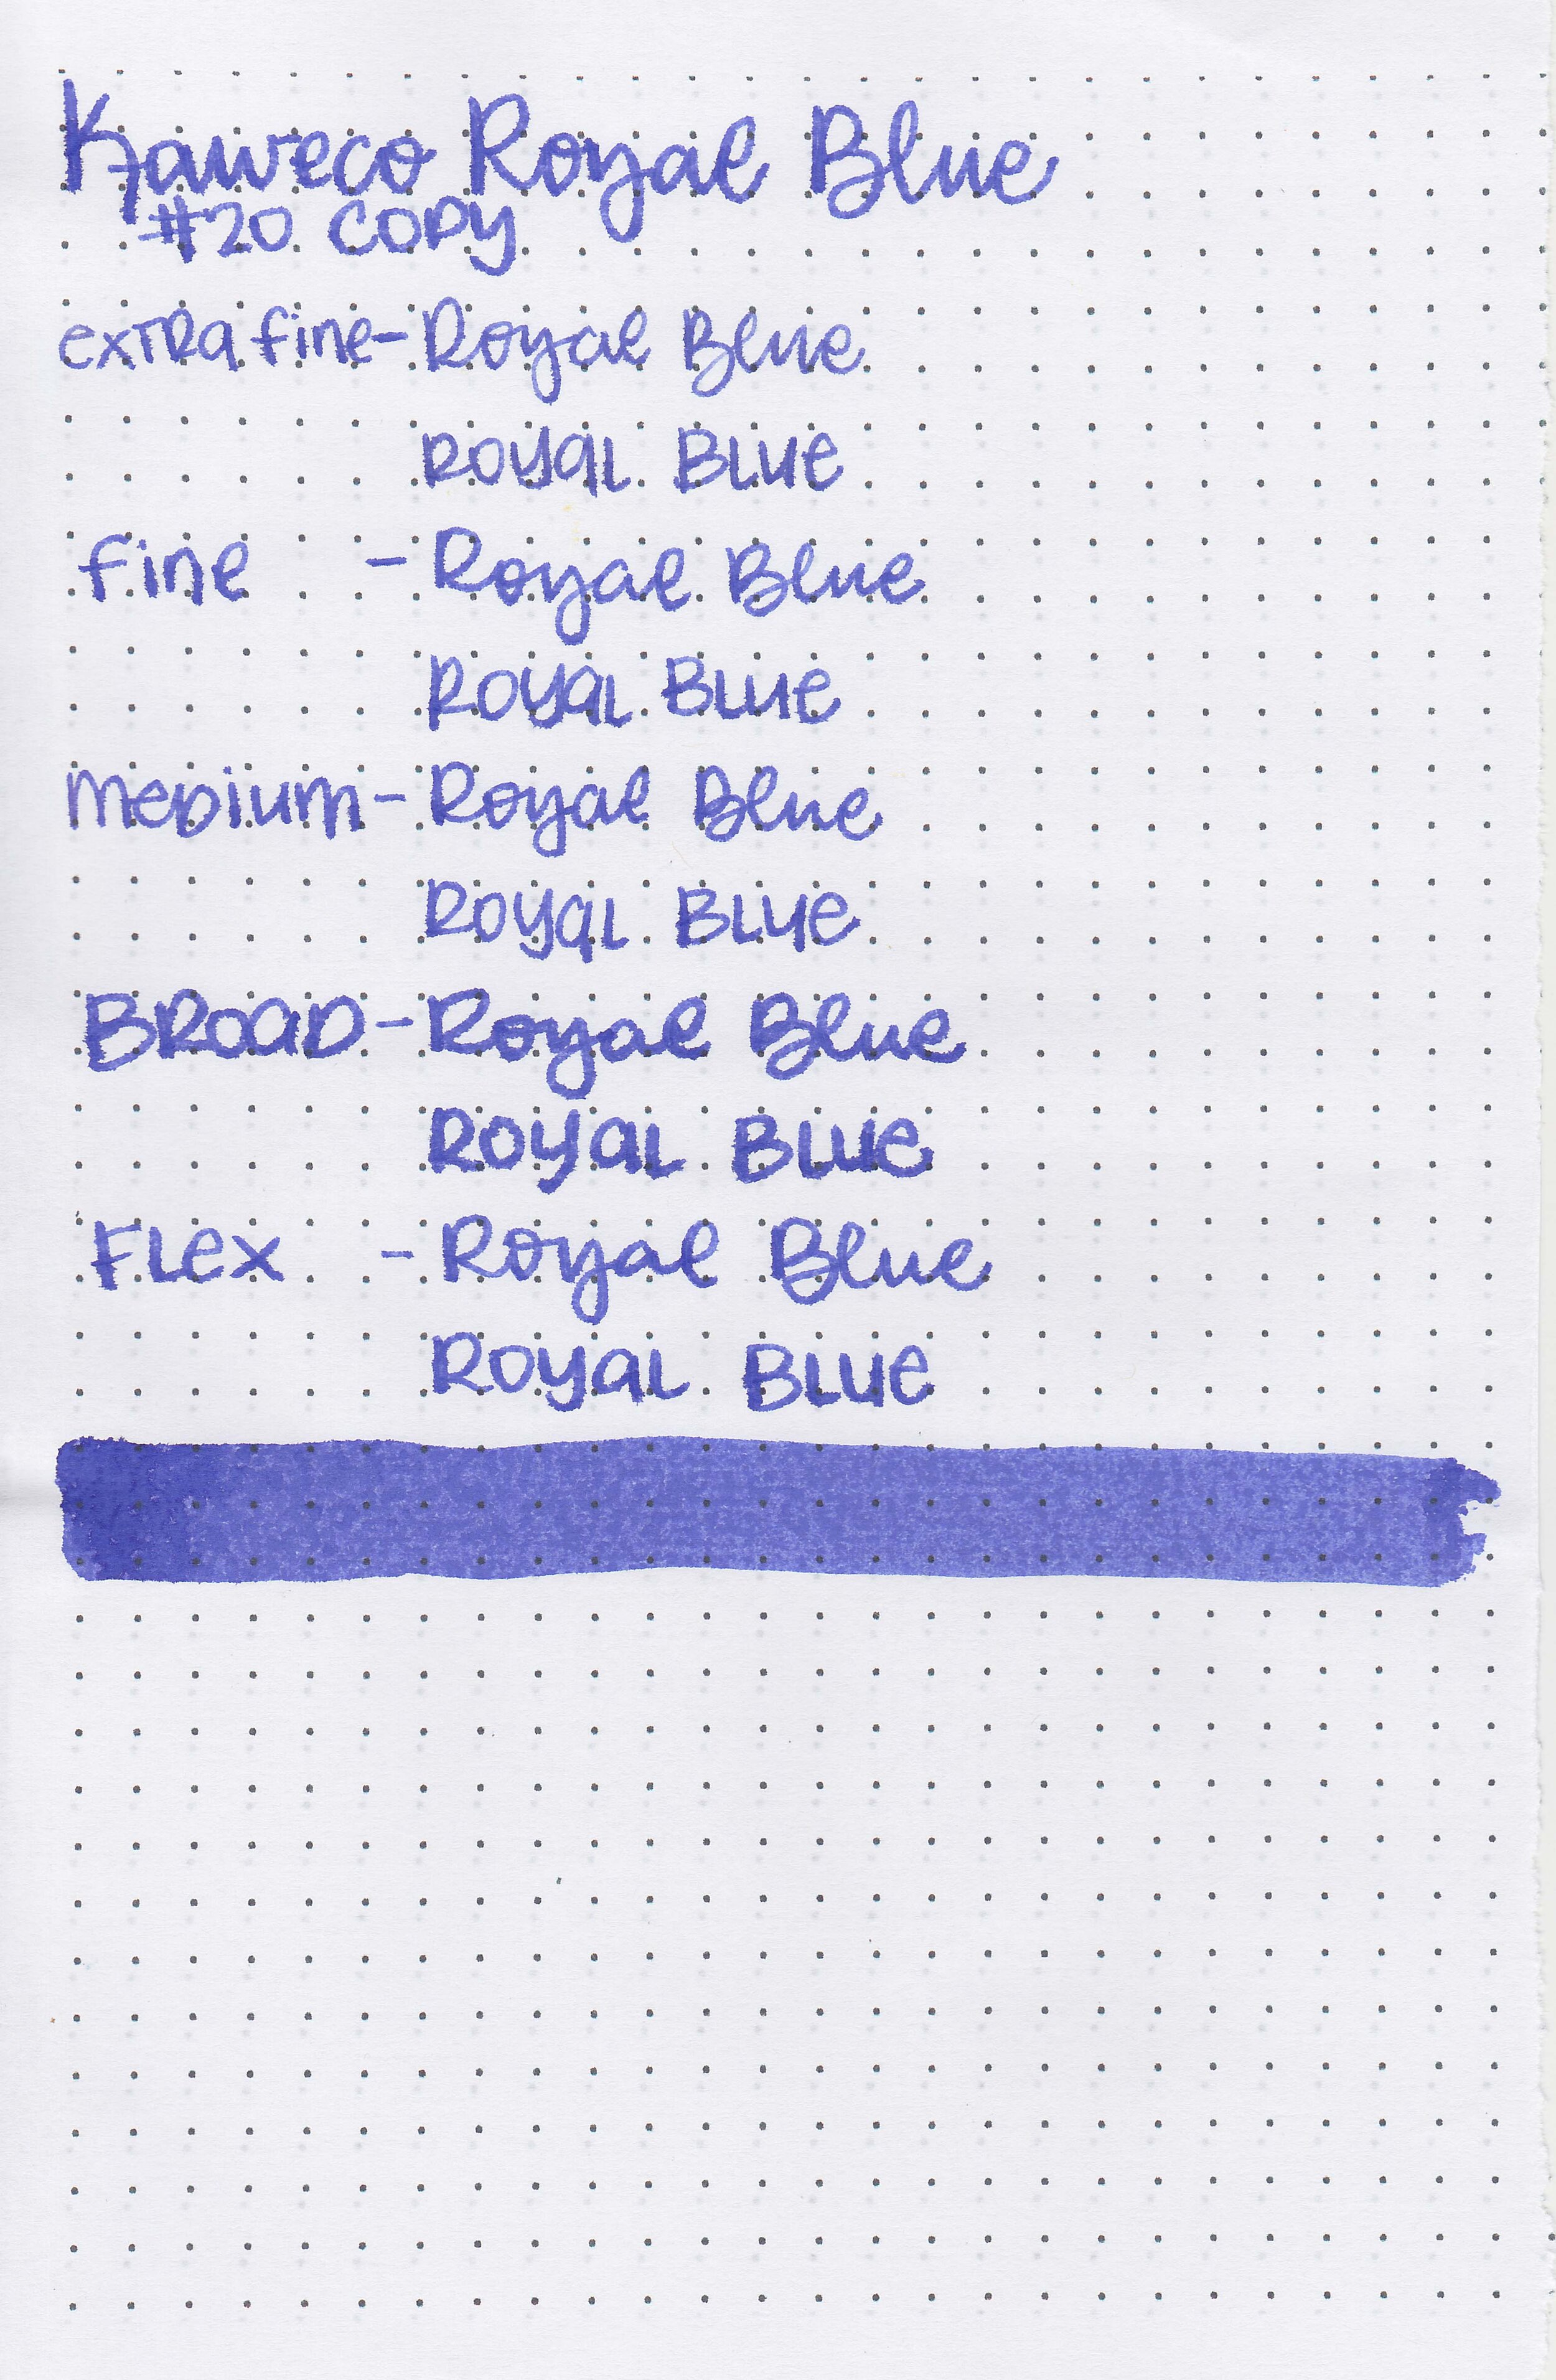 kw-royal-blue-11.jpg